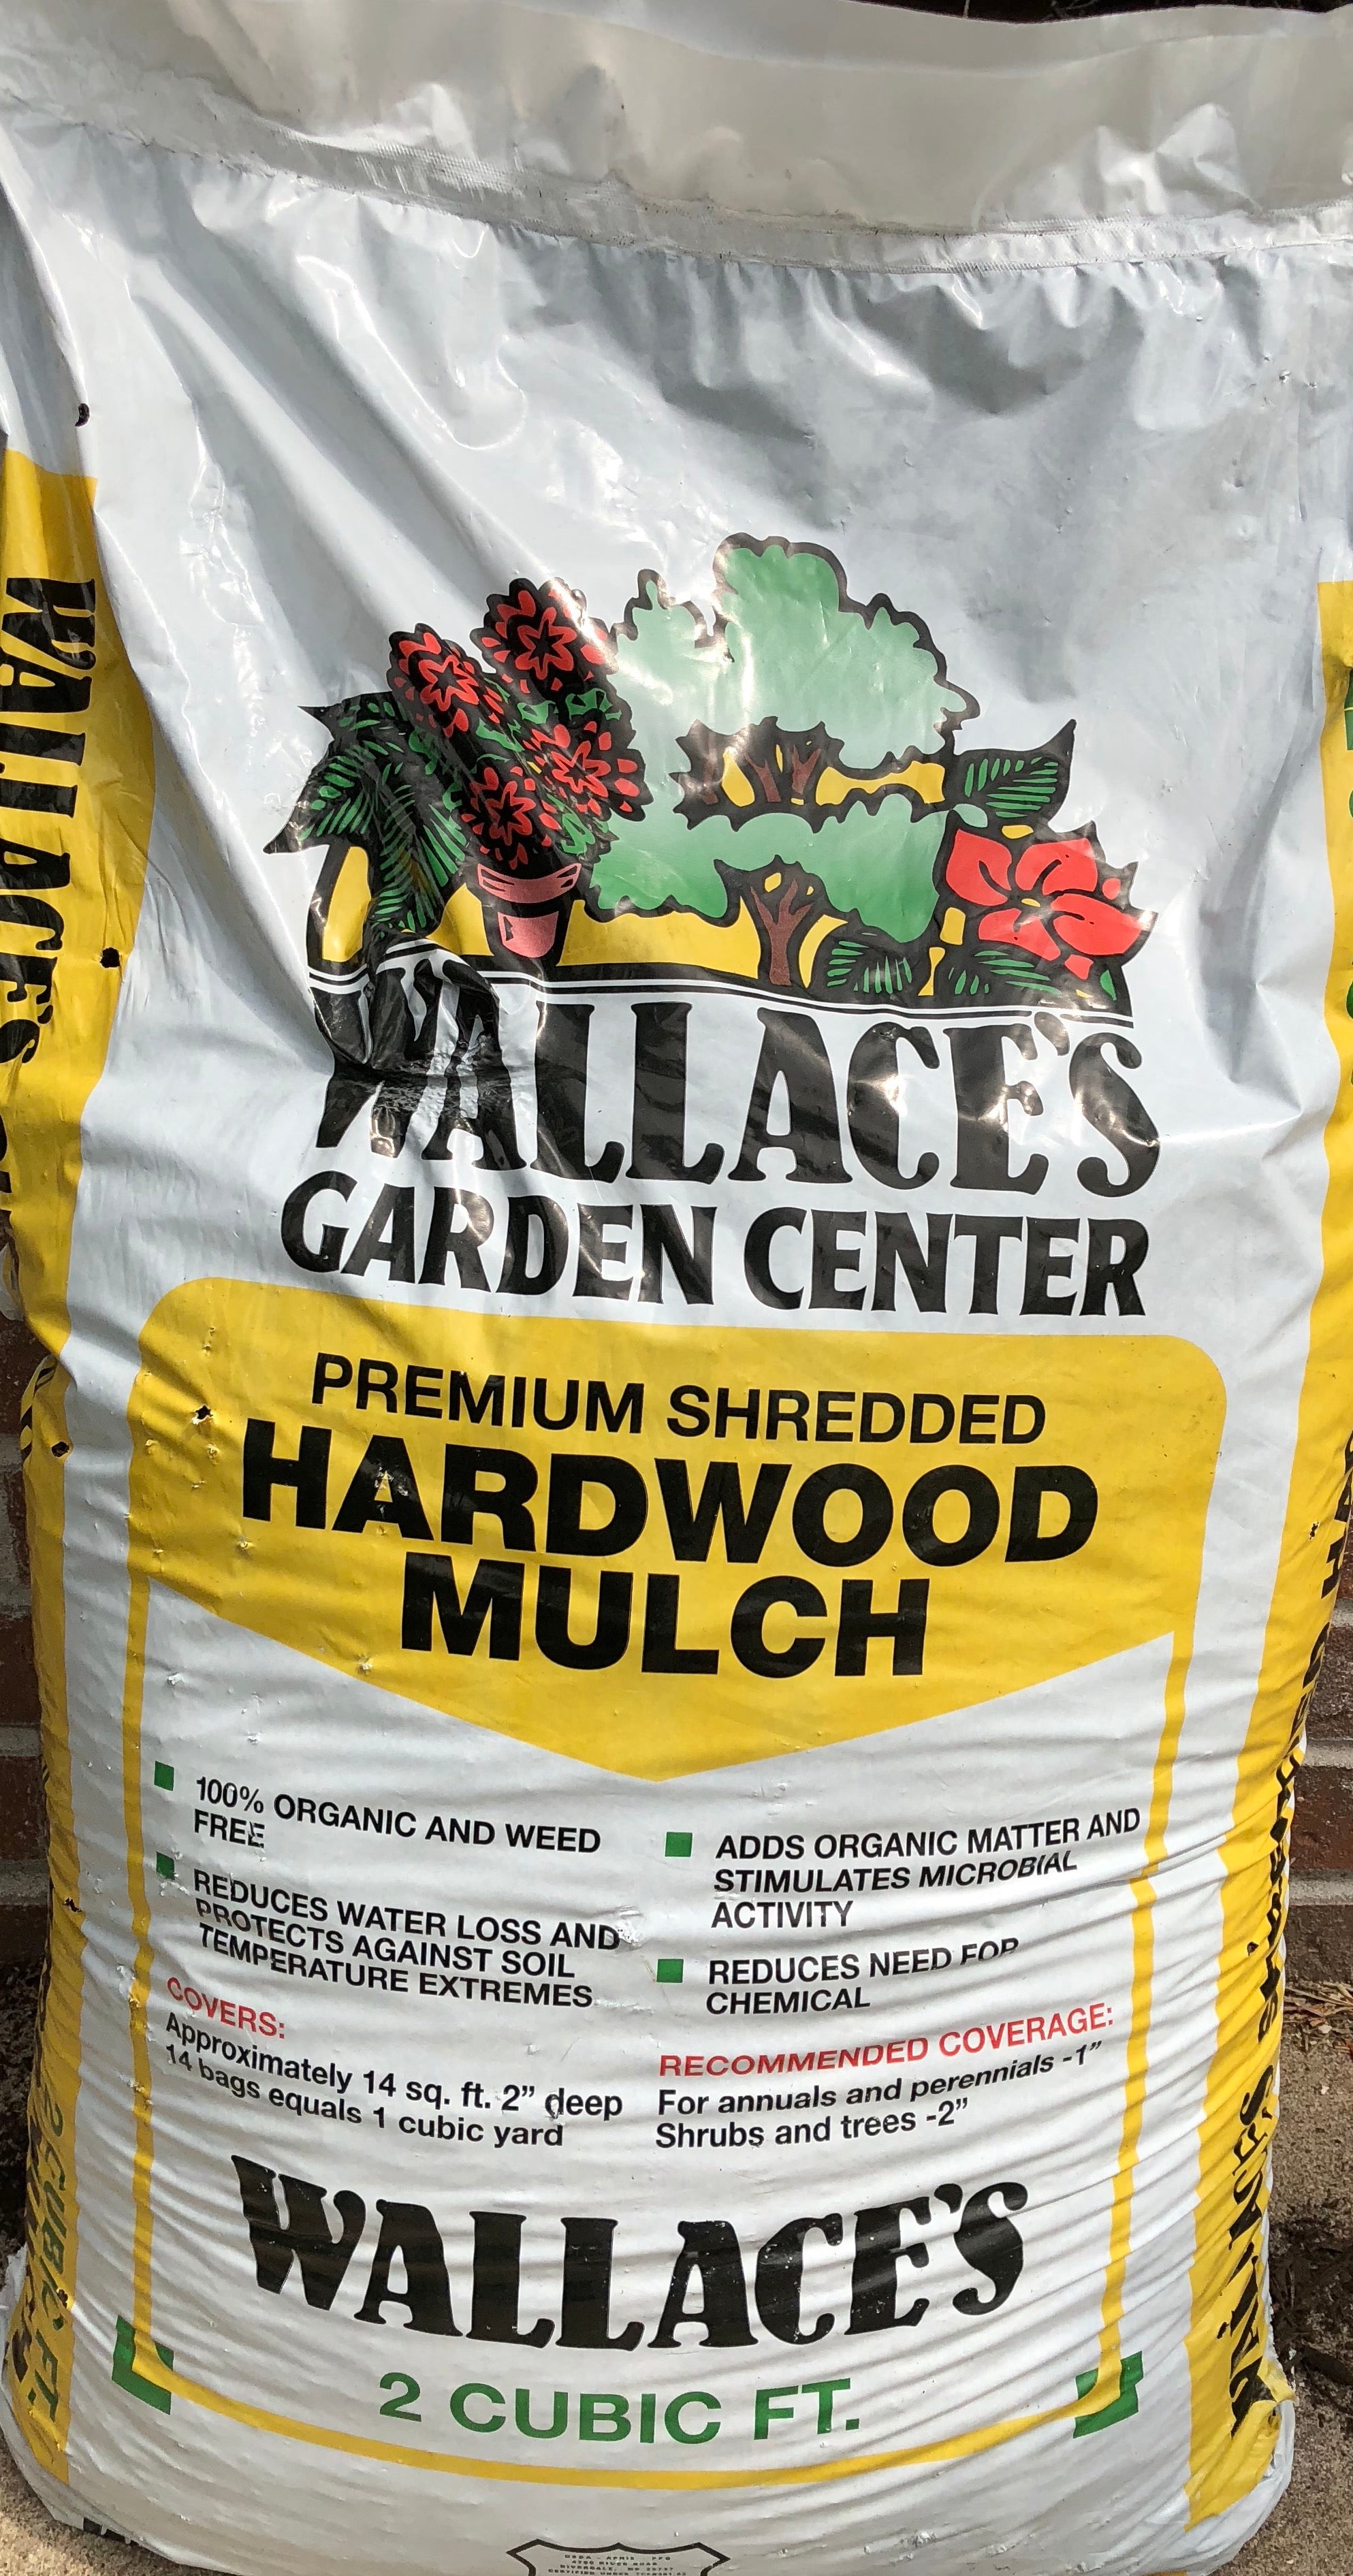 Wallaces Garden Center-Bettendorf-Iowa-enrich powder.png__PID:09f62c77-3e58-4b7d-8c46-09a413880265